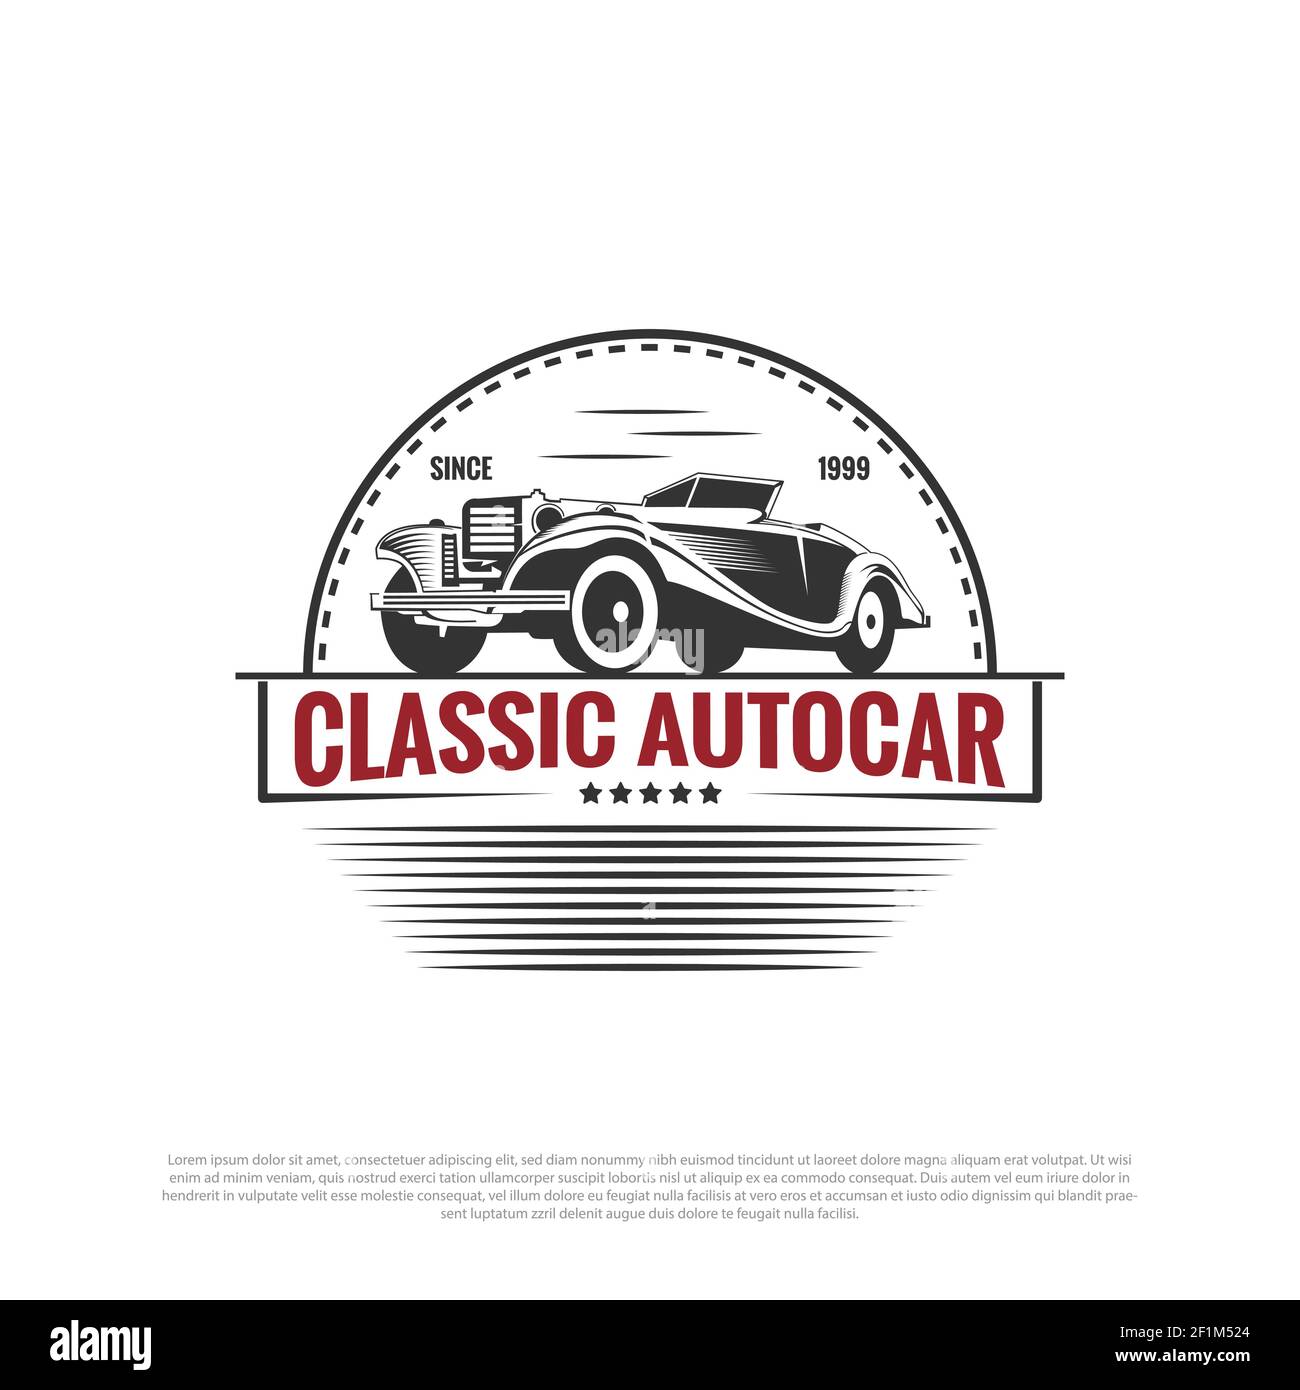 car logo - muscle car - classic car logo - vintage - classic - vector ...